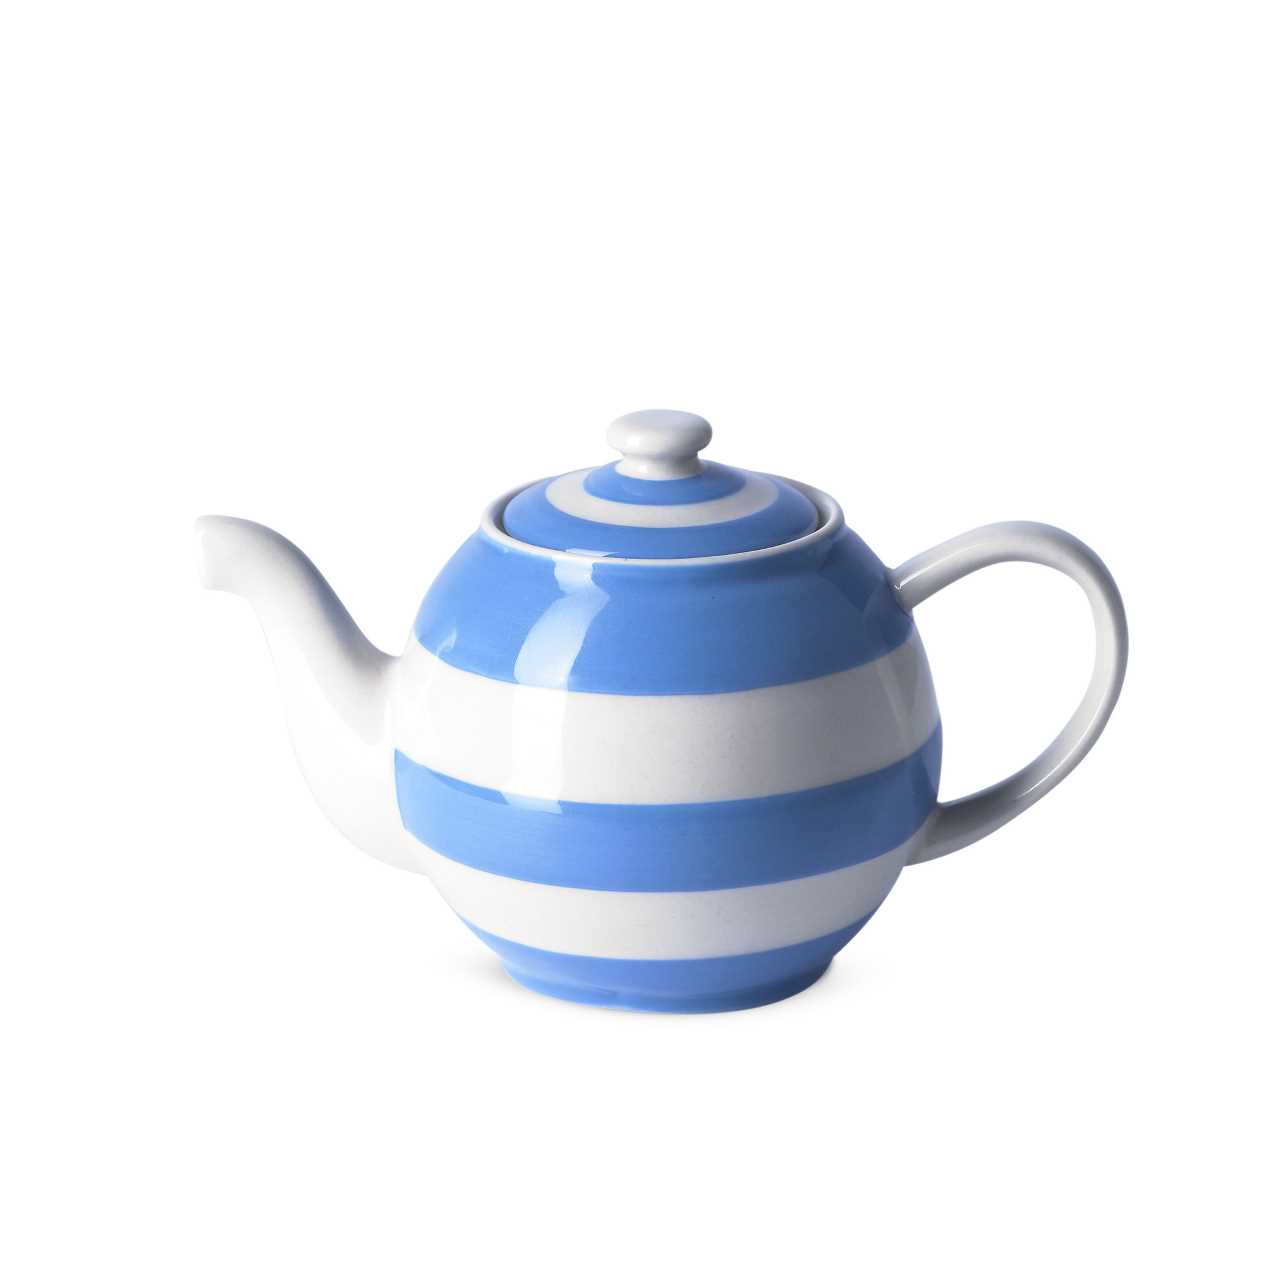 Cornishware Pottery Teapot in blue stripes